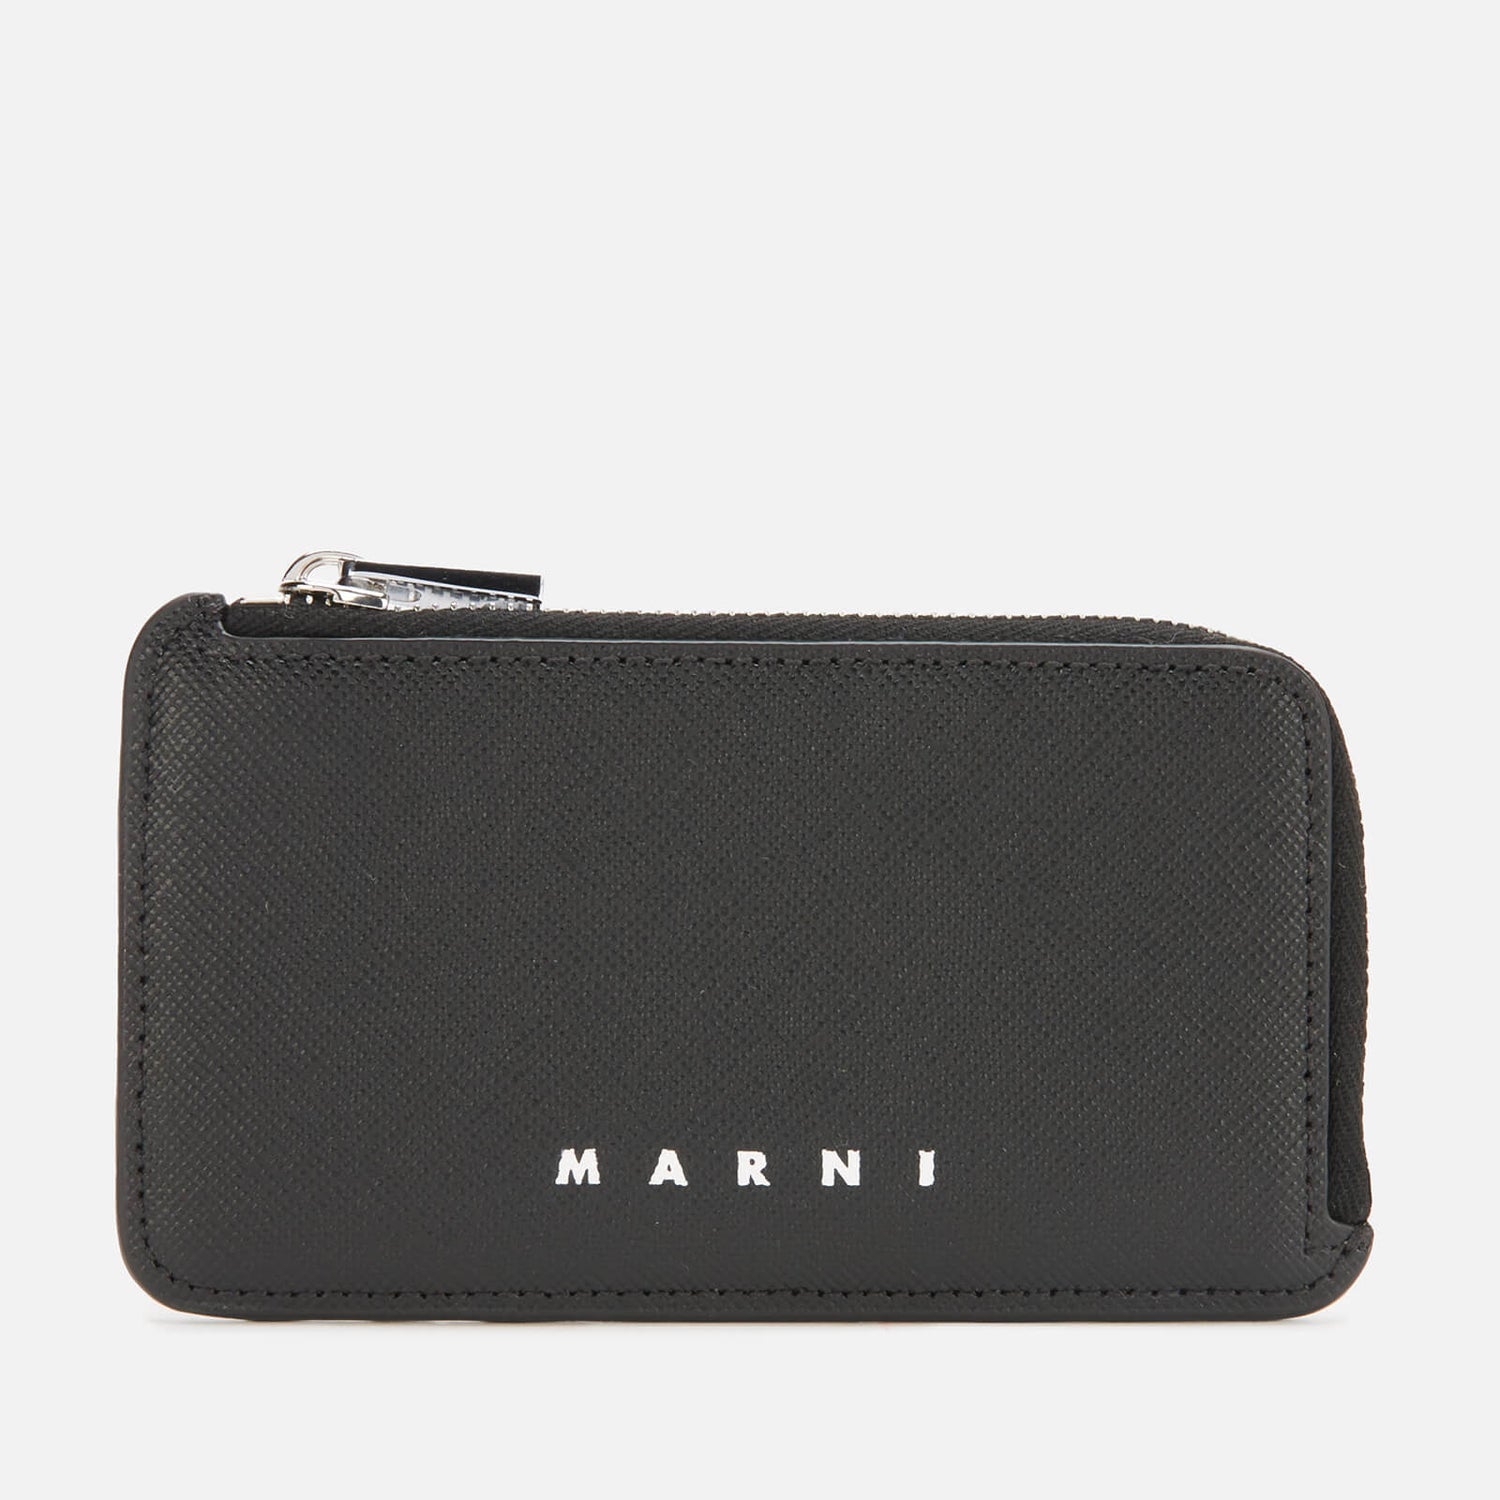 Marni Men's Zip Coin And Card Holder - Black/Black